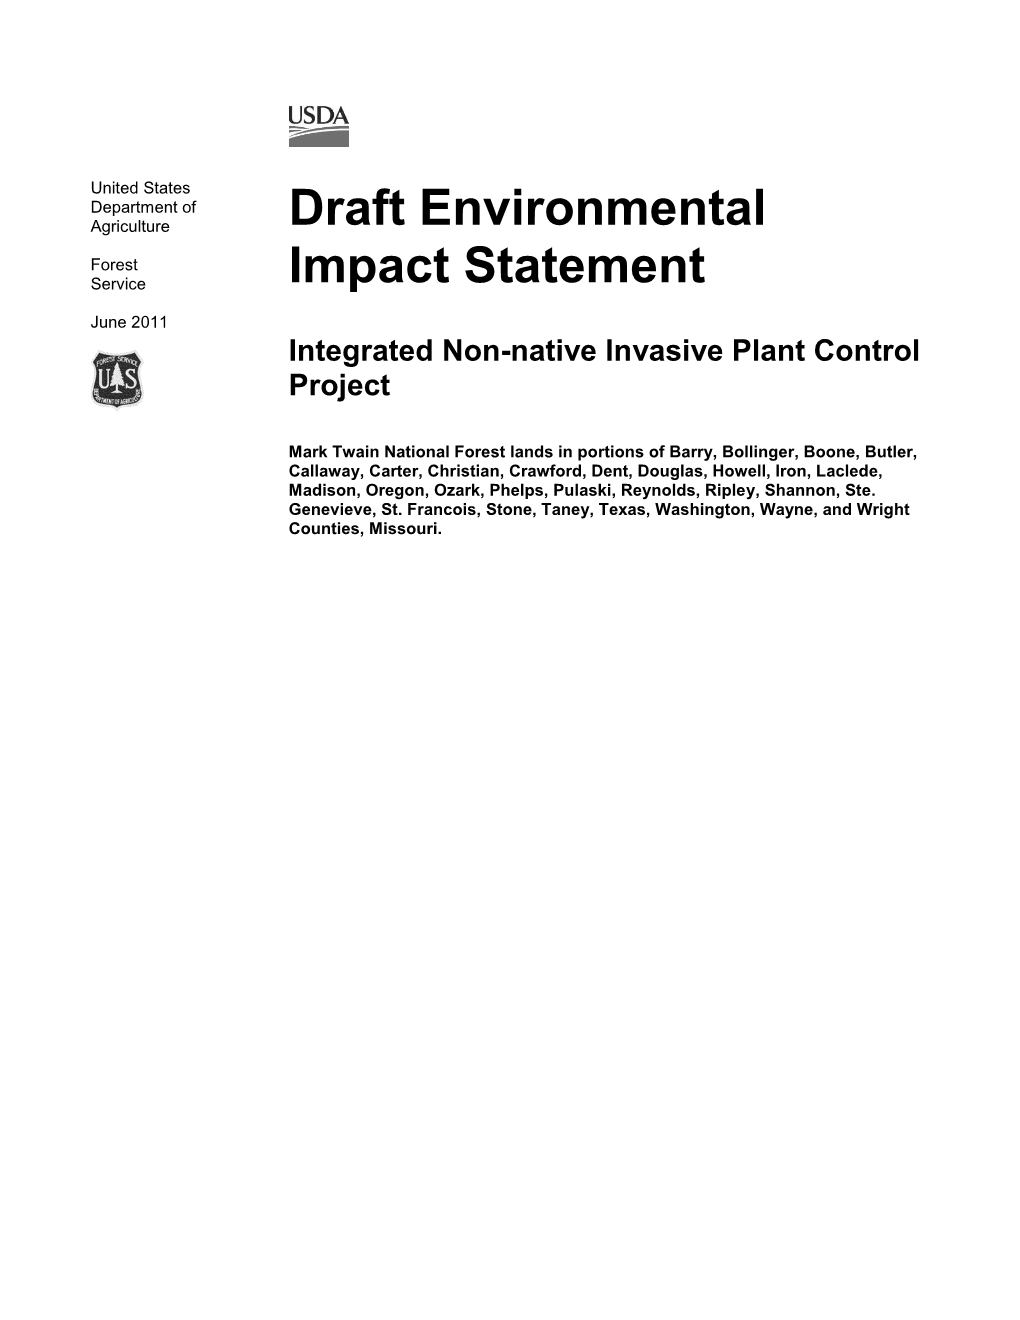 Draft Environmental Impact Statement Integrated Non-Native Invasive Plant Control